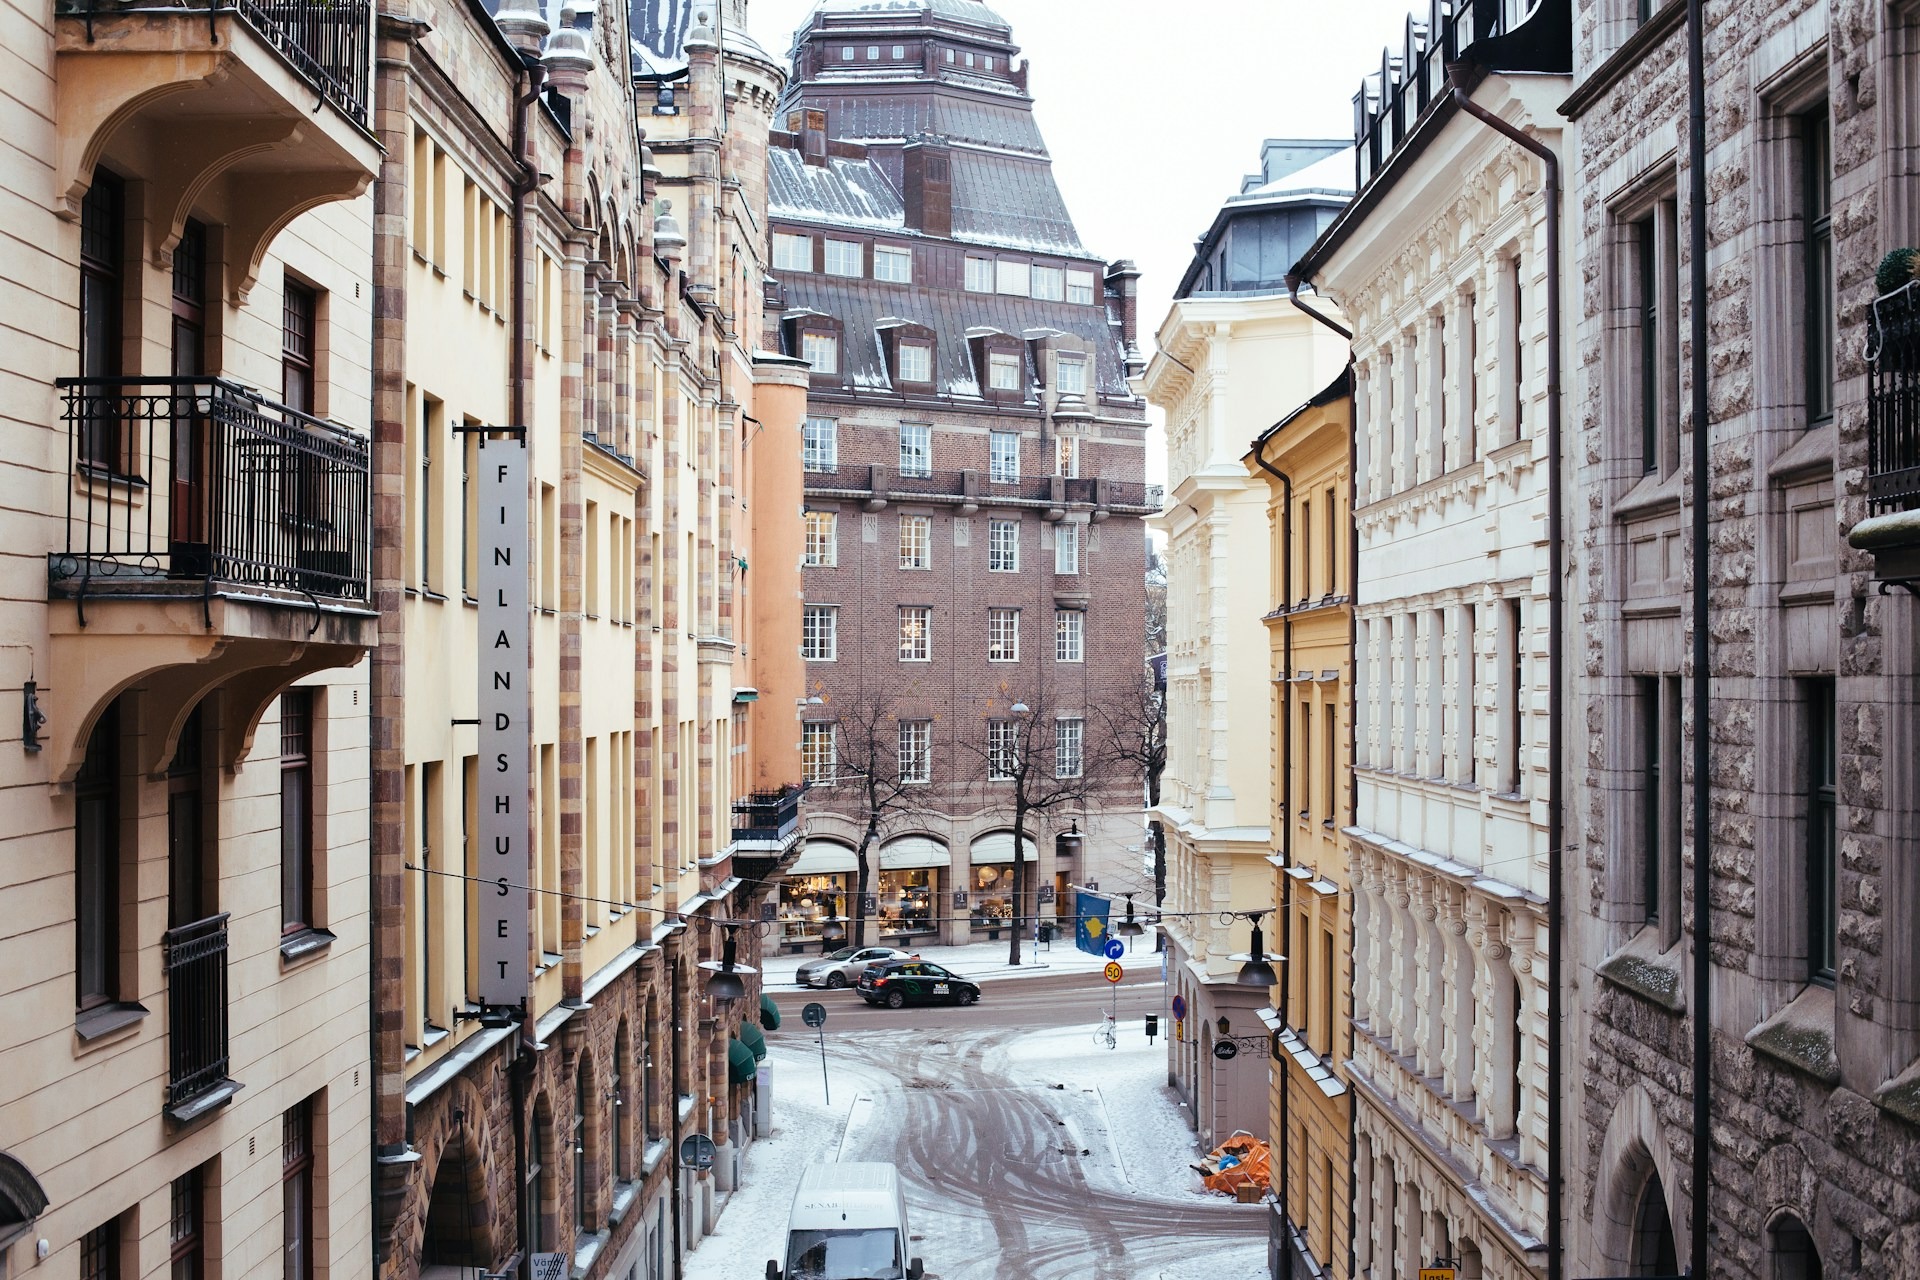 Stockholm in Winter